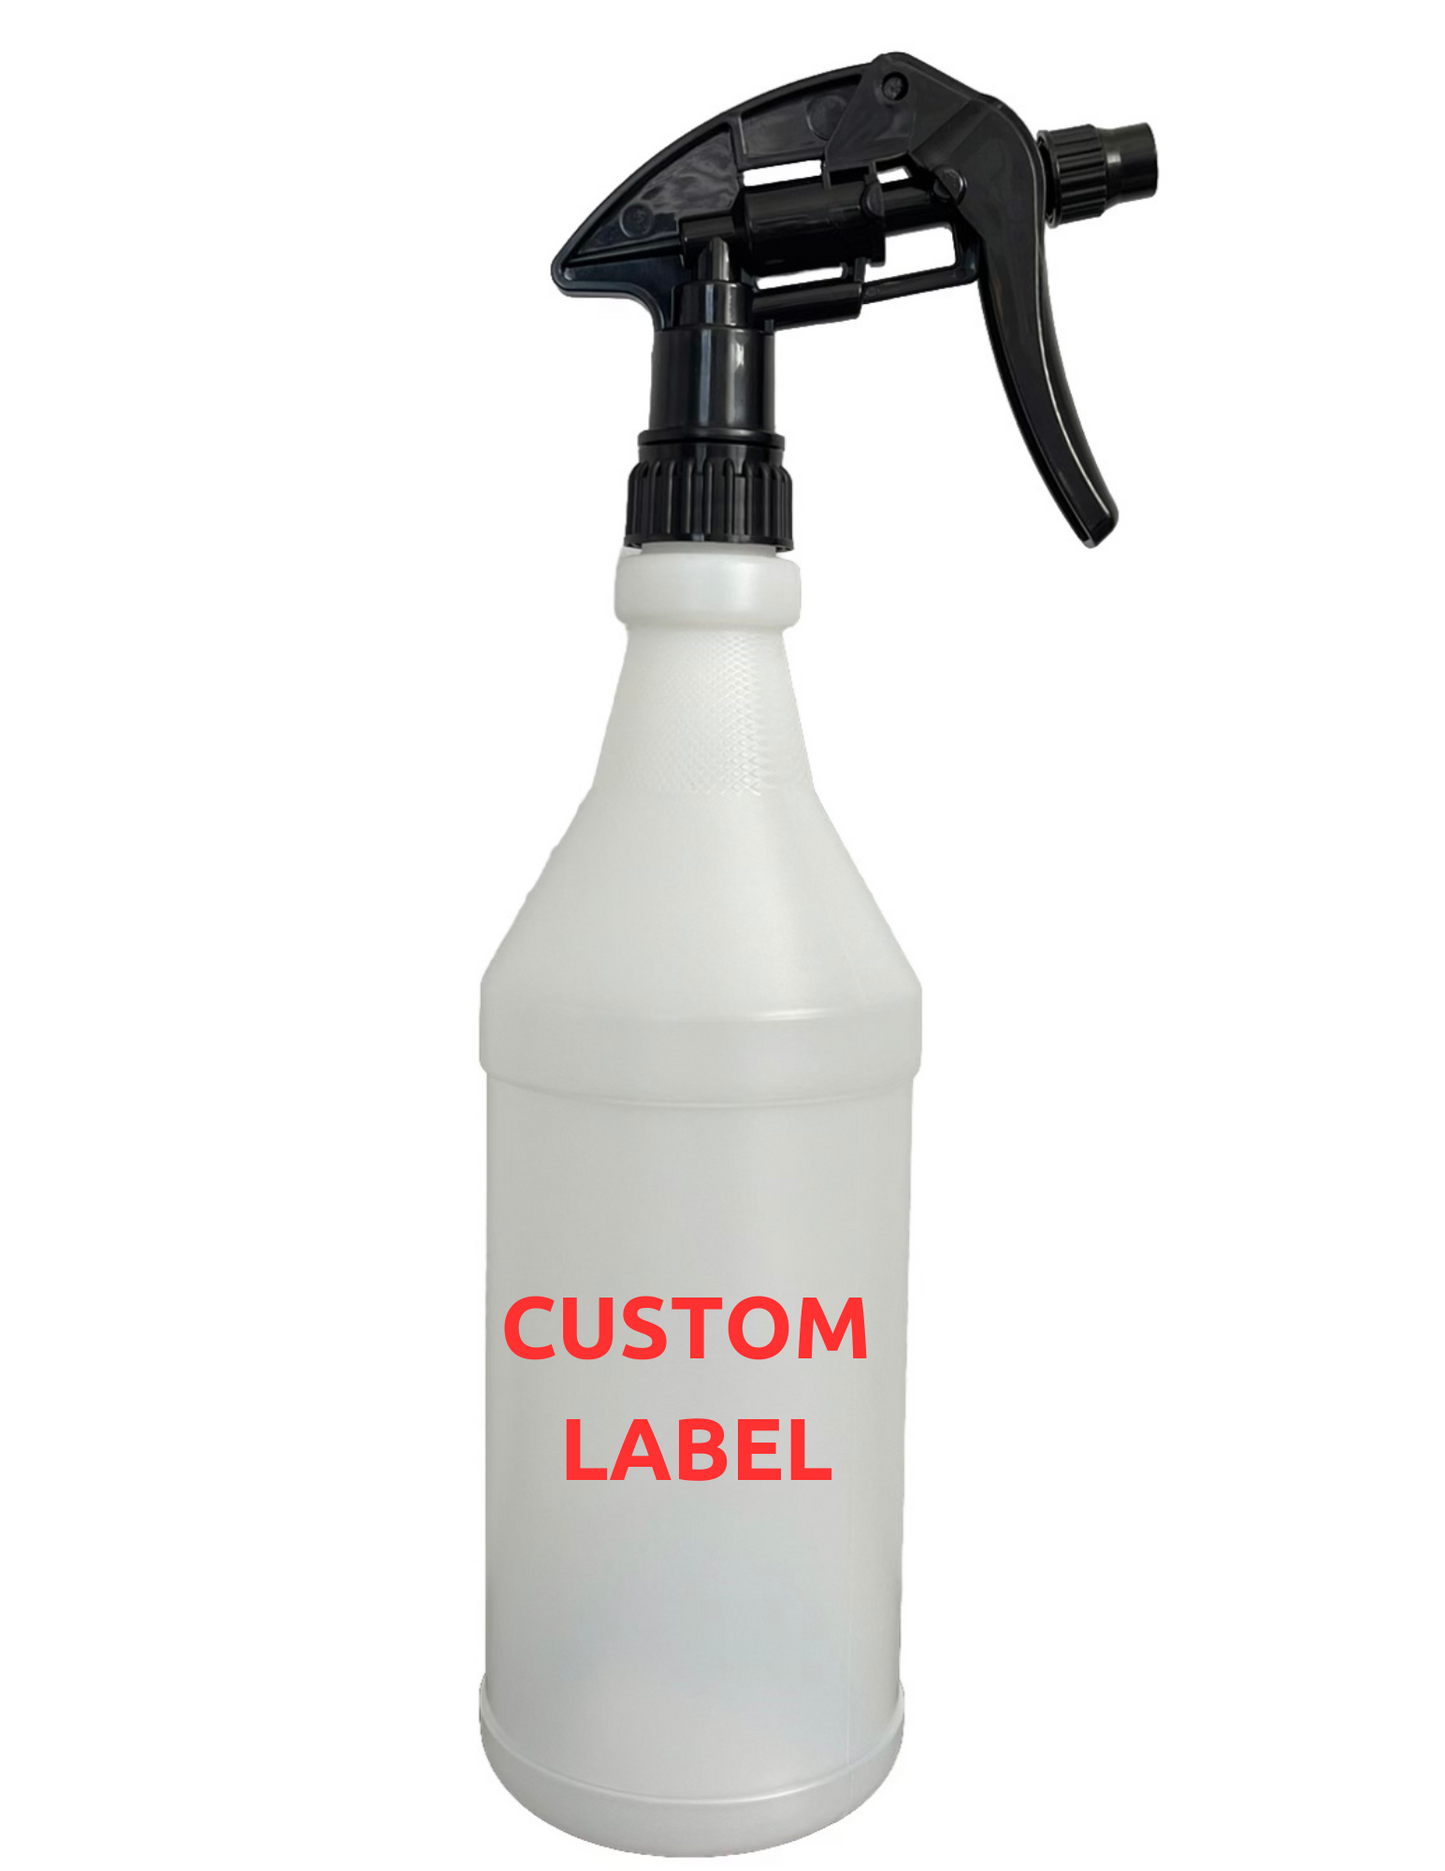 32 ounce Spray Bottle - Custom Label (504 Units)